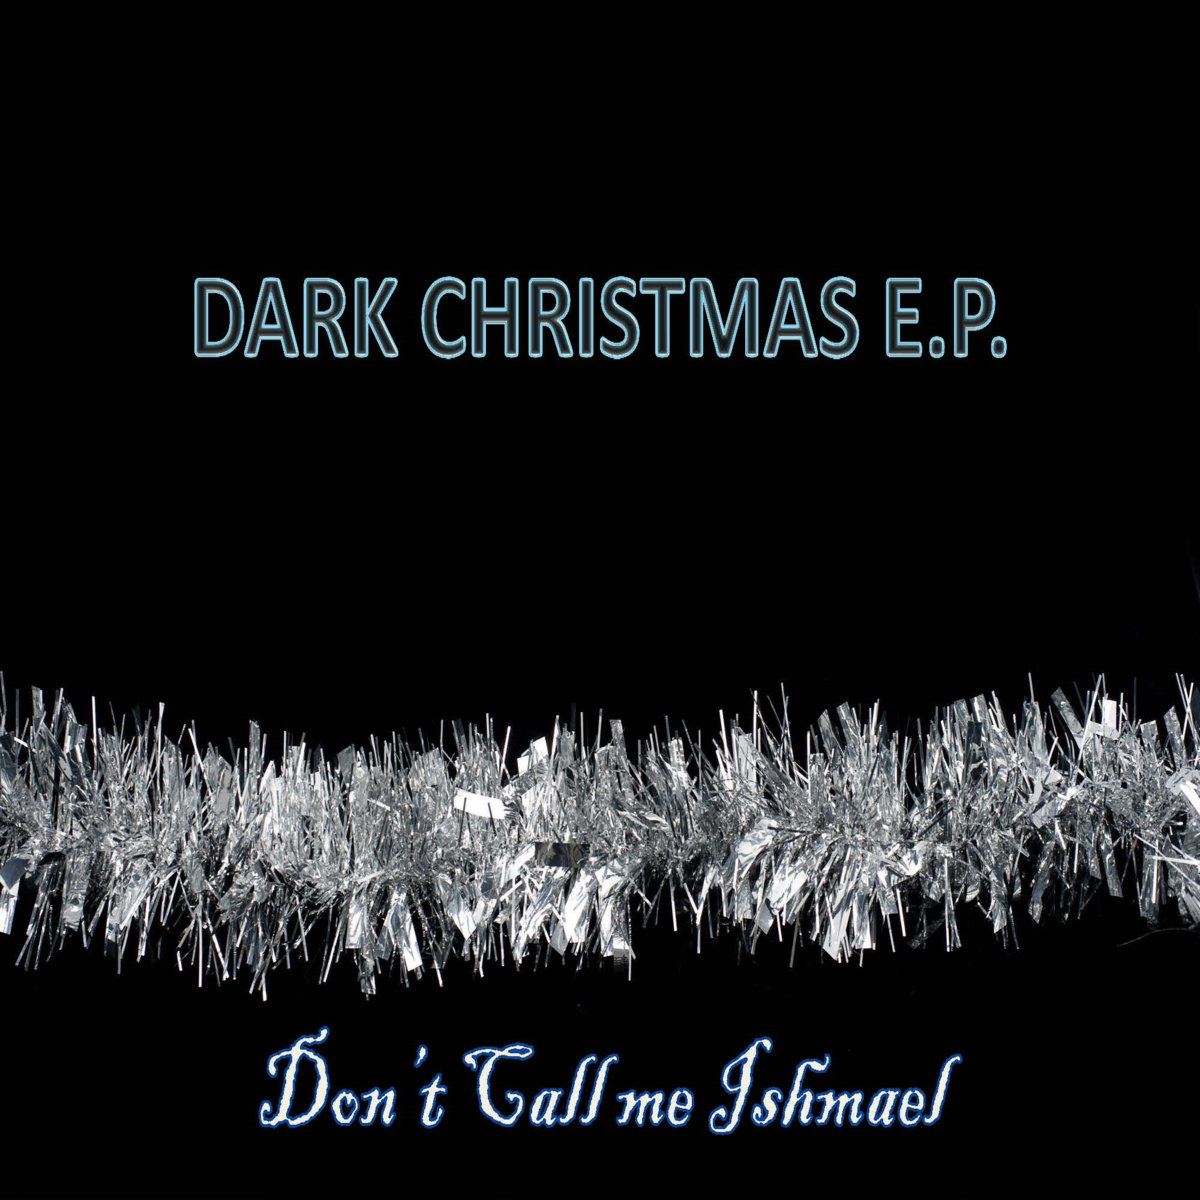 Don't Call me Ishmael Dark Christmas E.P.